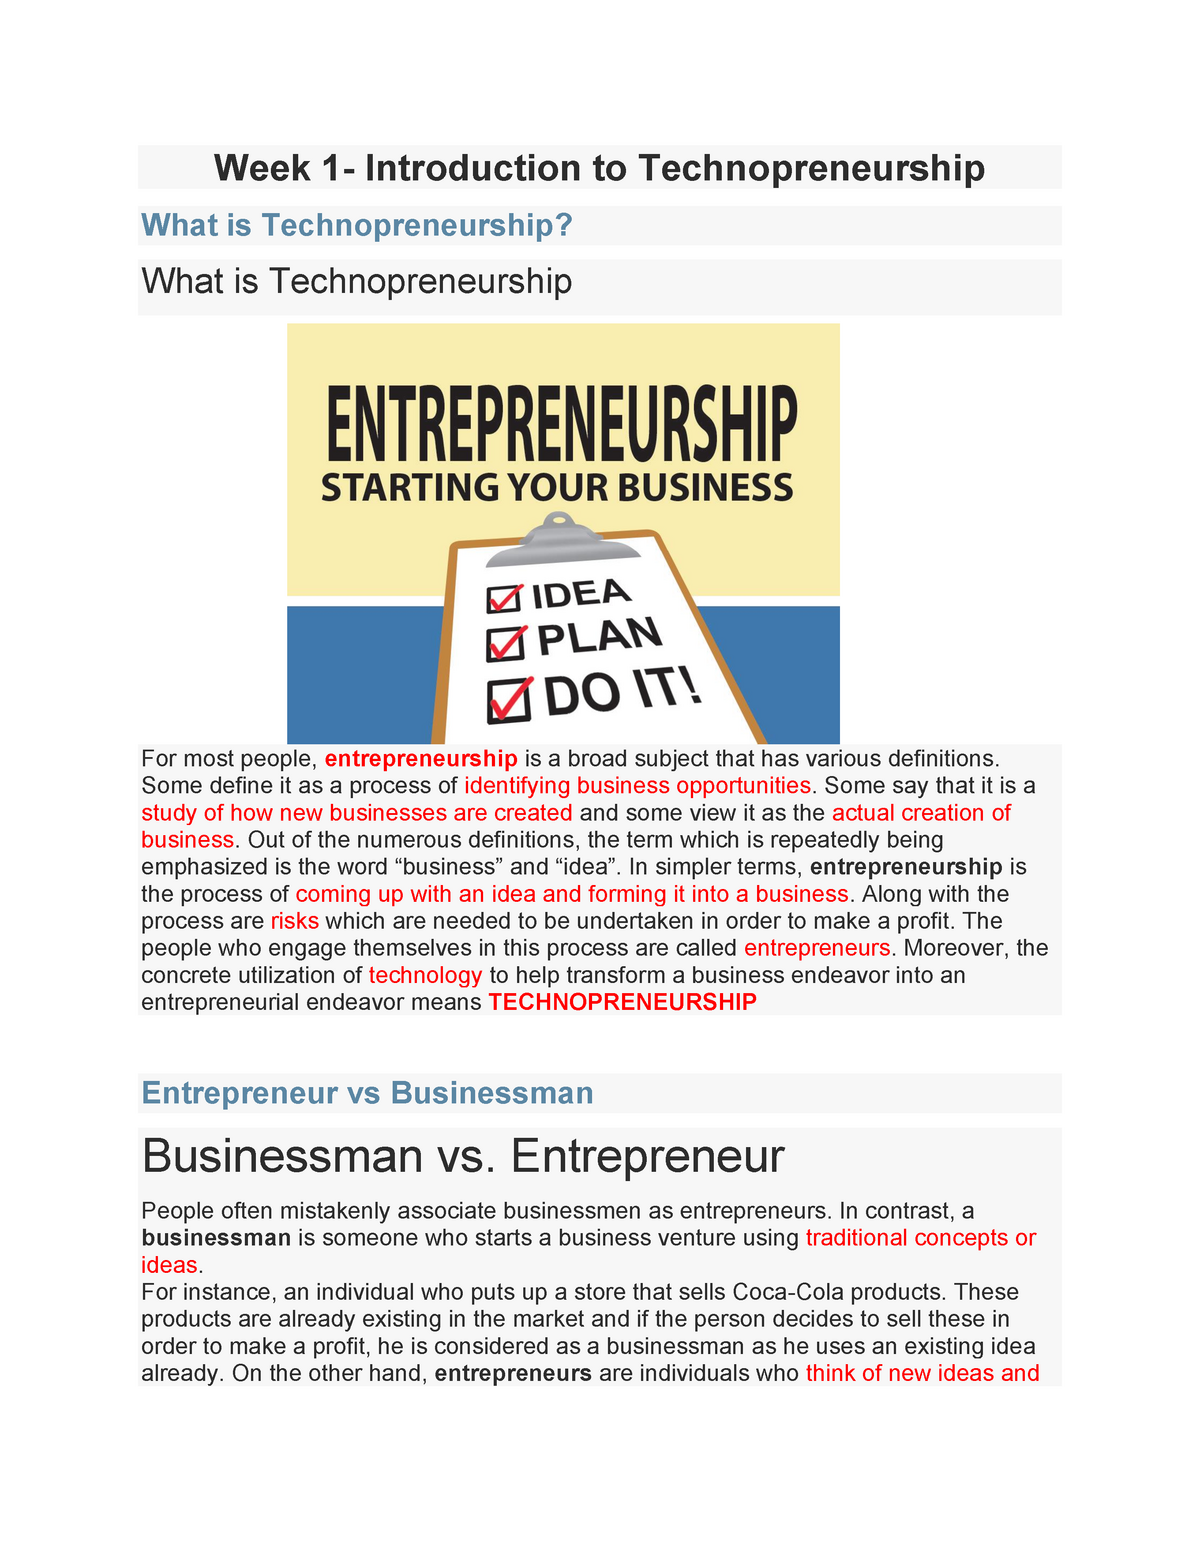 purpose of business plan in technopreneurship